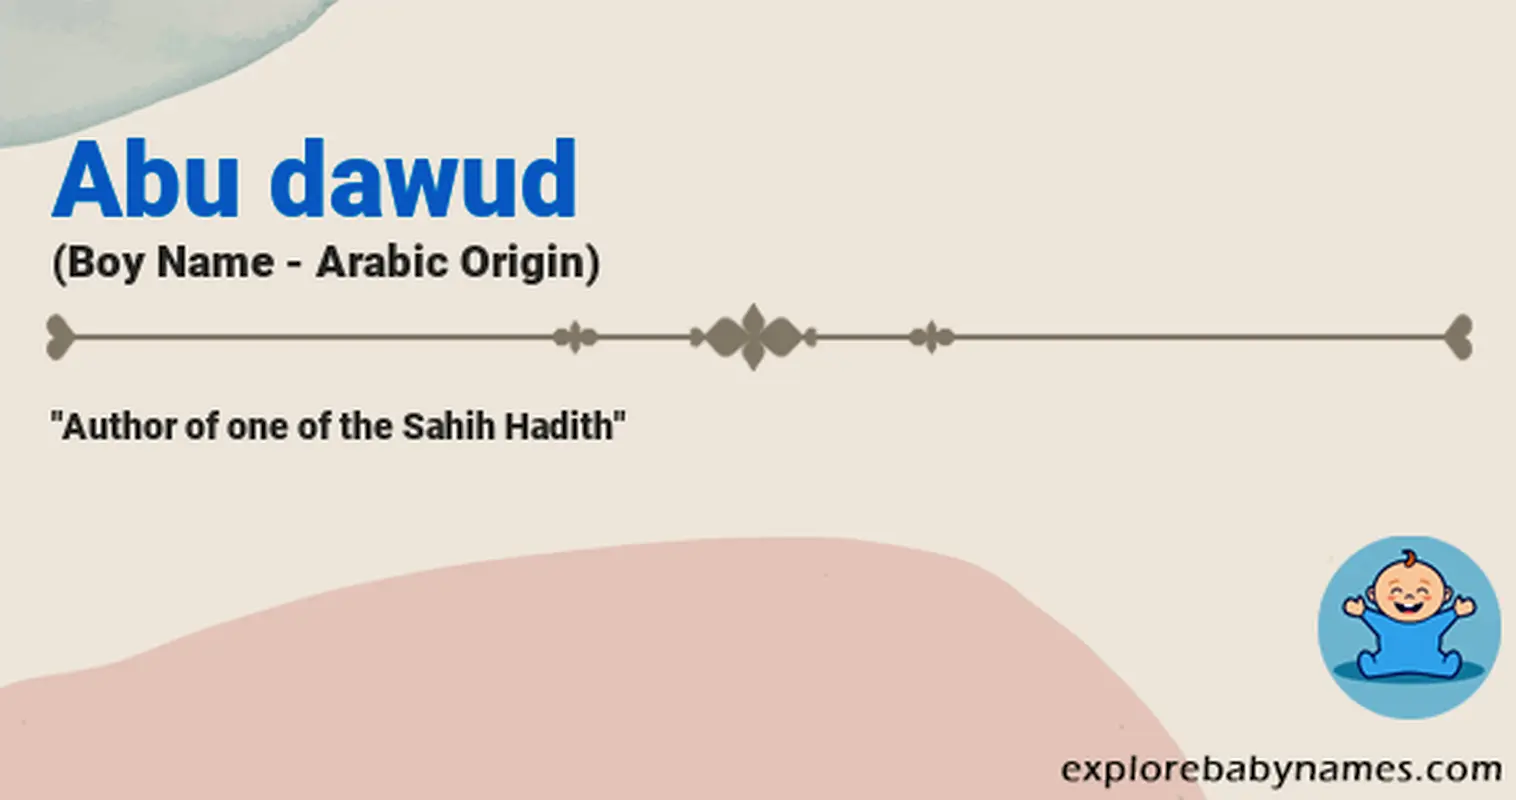 Meaning of Abu dawud